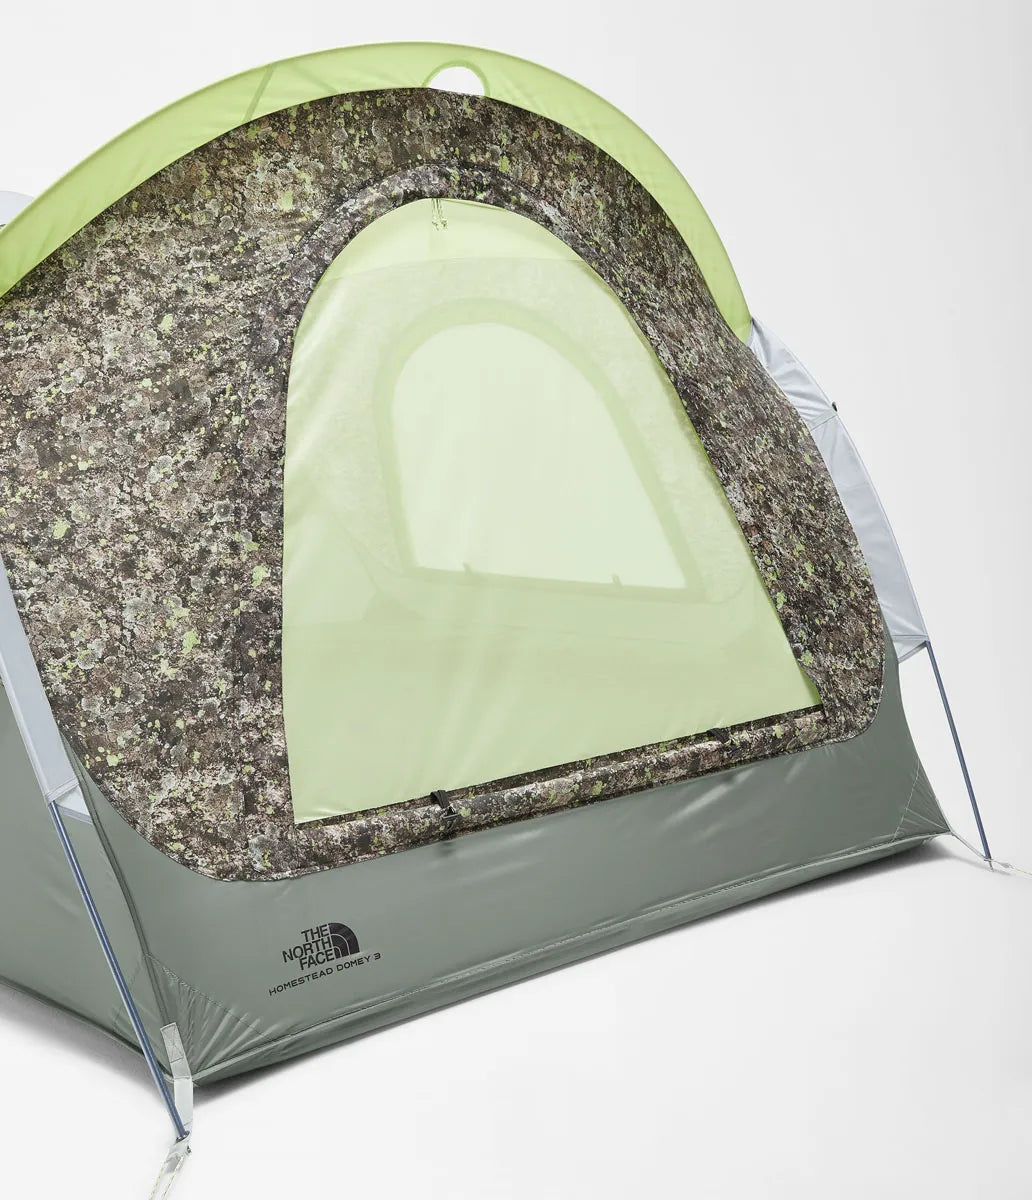 Homestead Domey 3 Tent - 3-Person